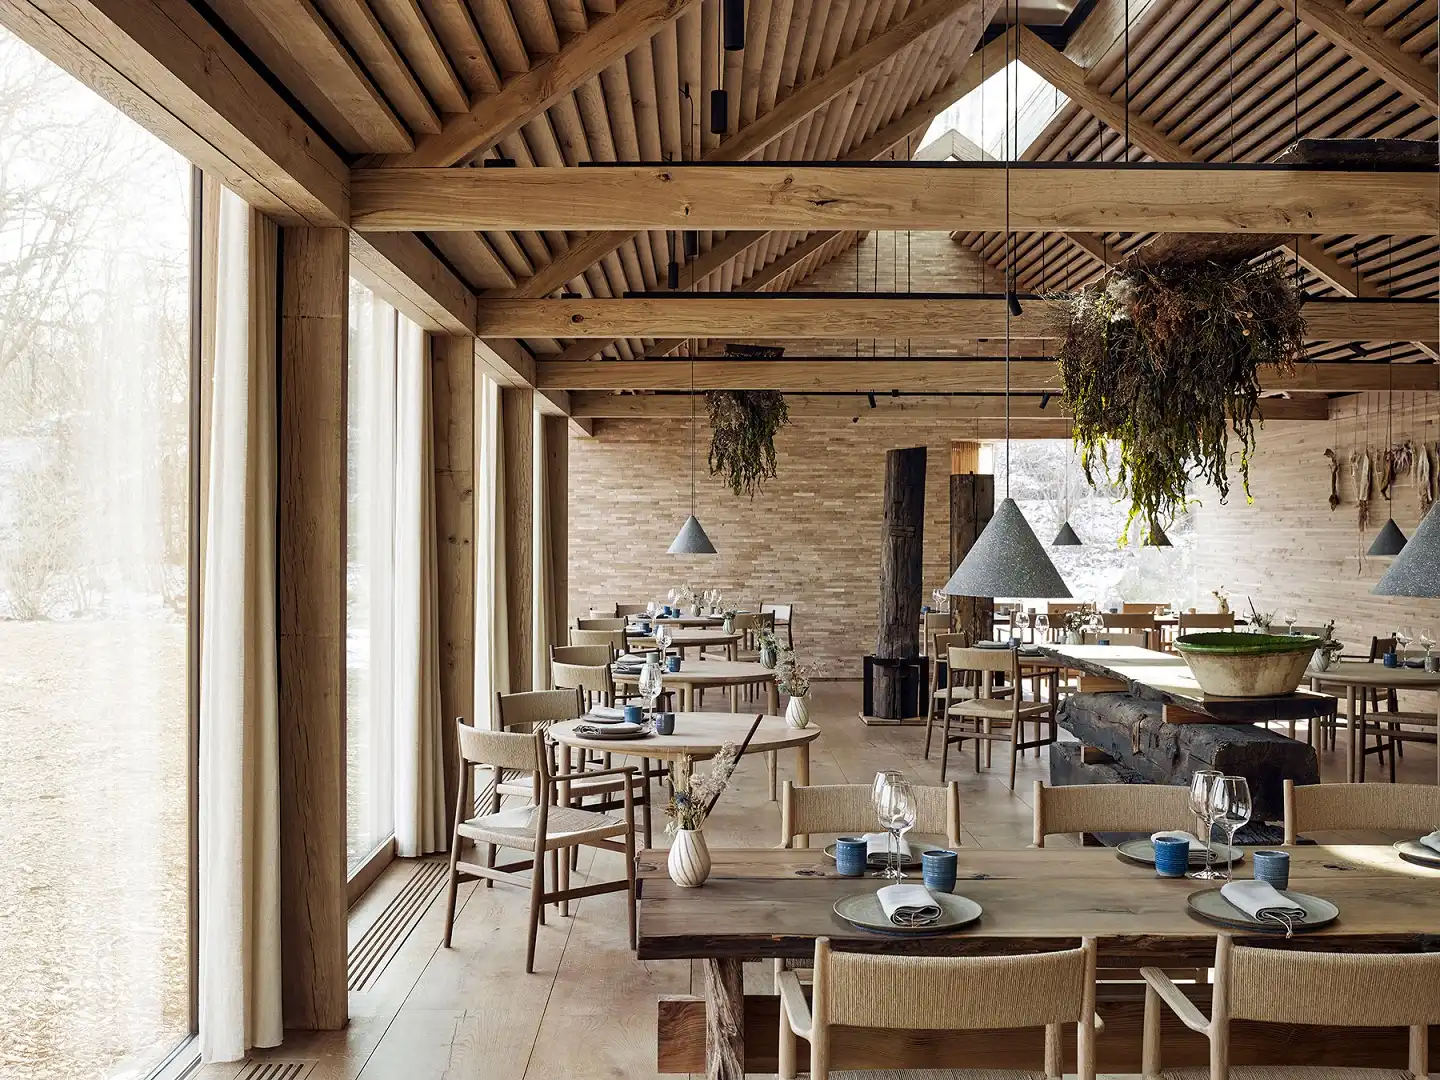 4. Furniture Selection: Wooden Restaurant Interior Design